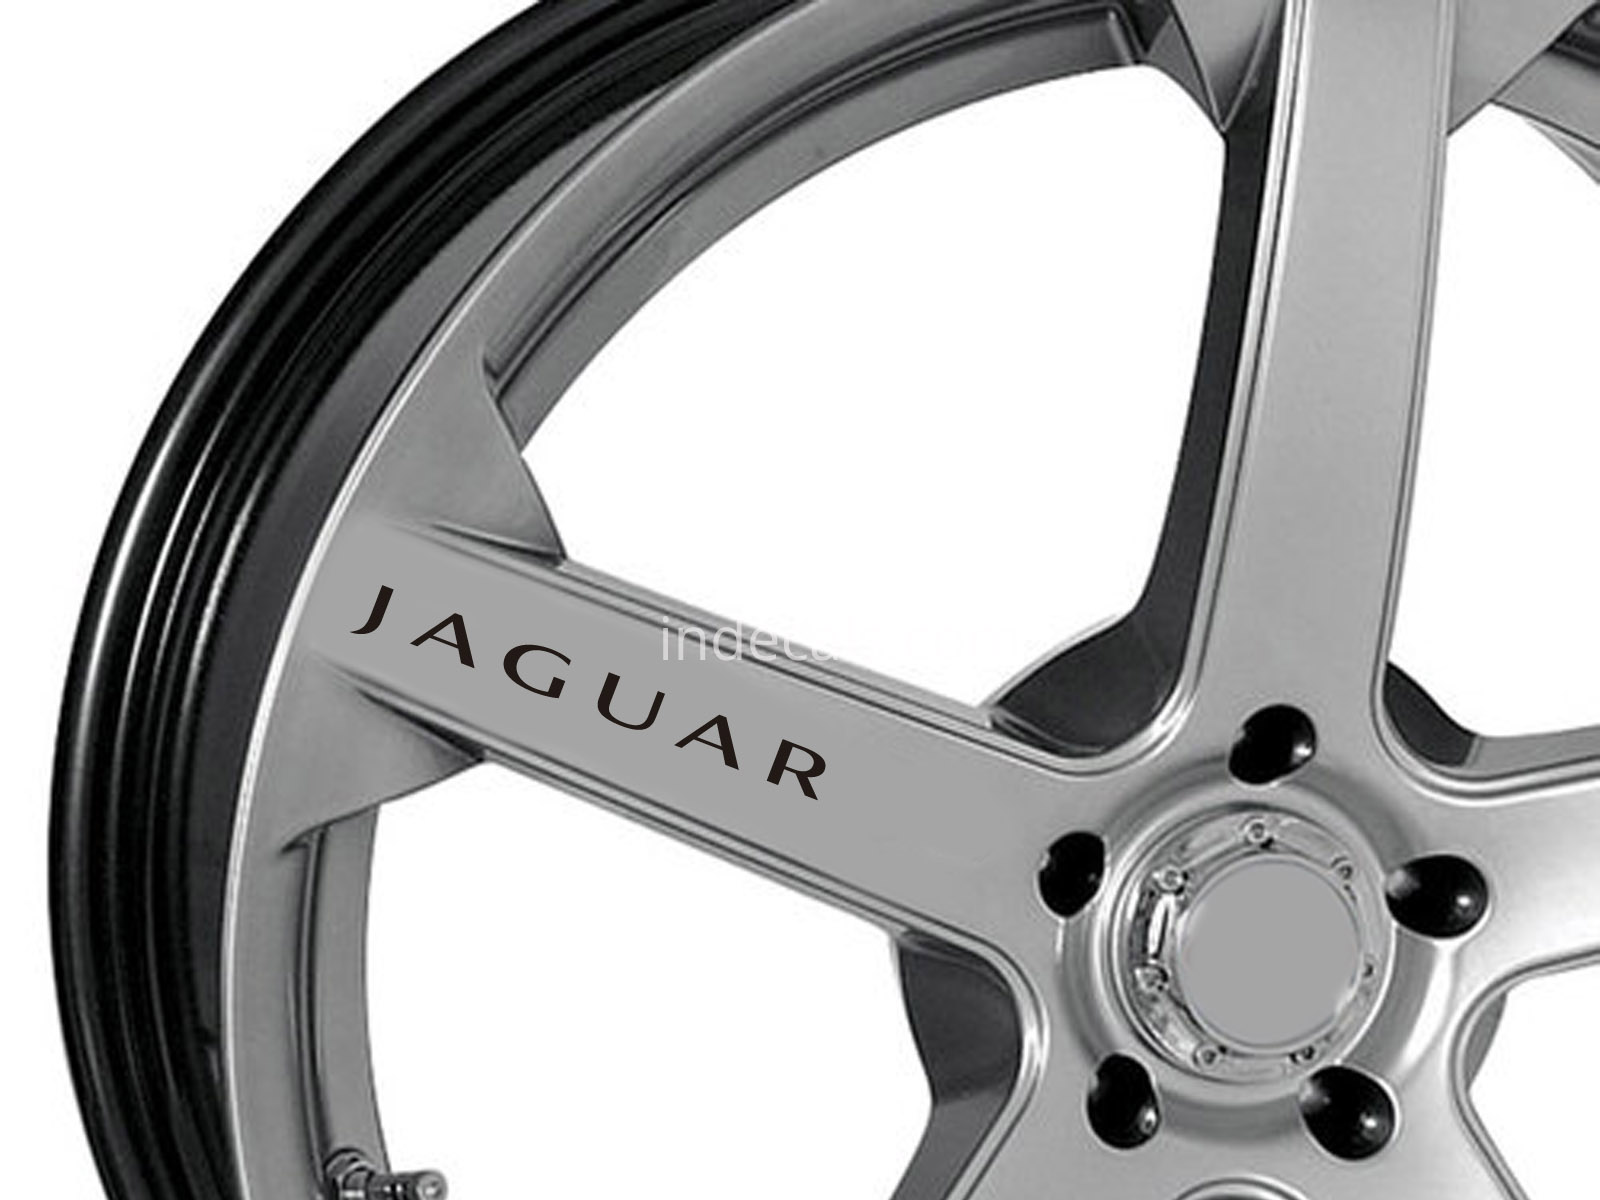 6 x Jaguar Stickers for Wheels - Black